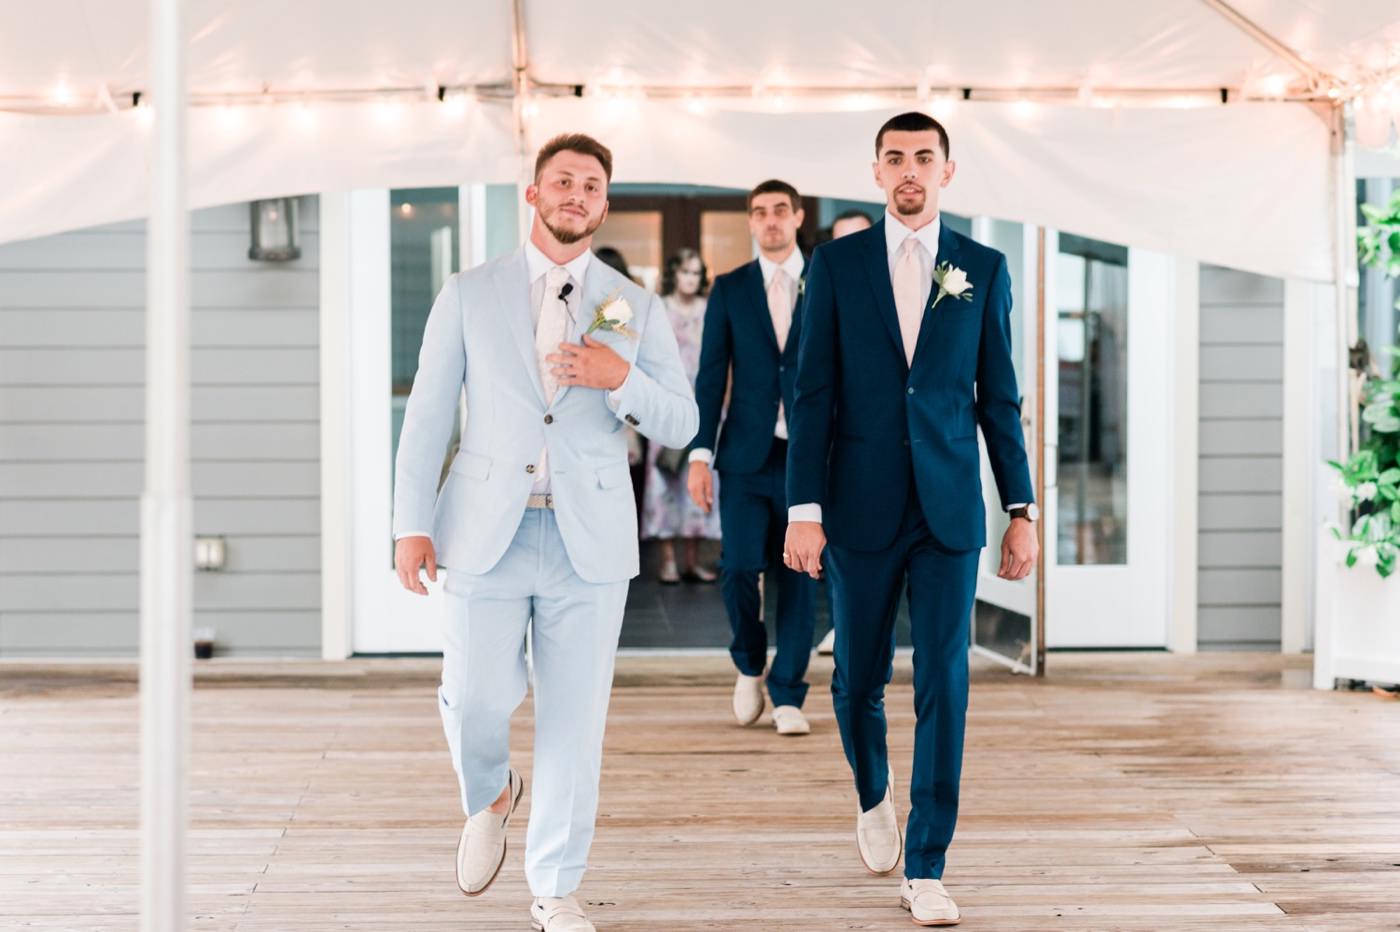 Chesapeake Bay Beach Club Wedding photos, groom and groomsmen enter wedding, CBBC, Rainy wedding inspiration